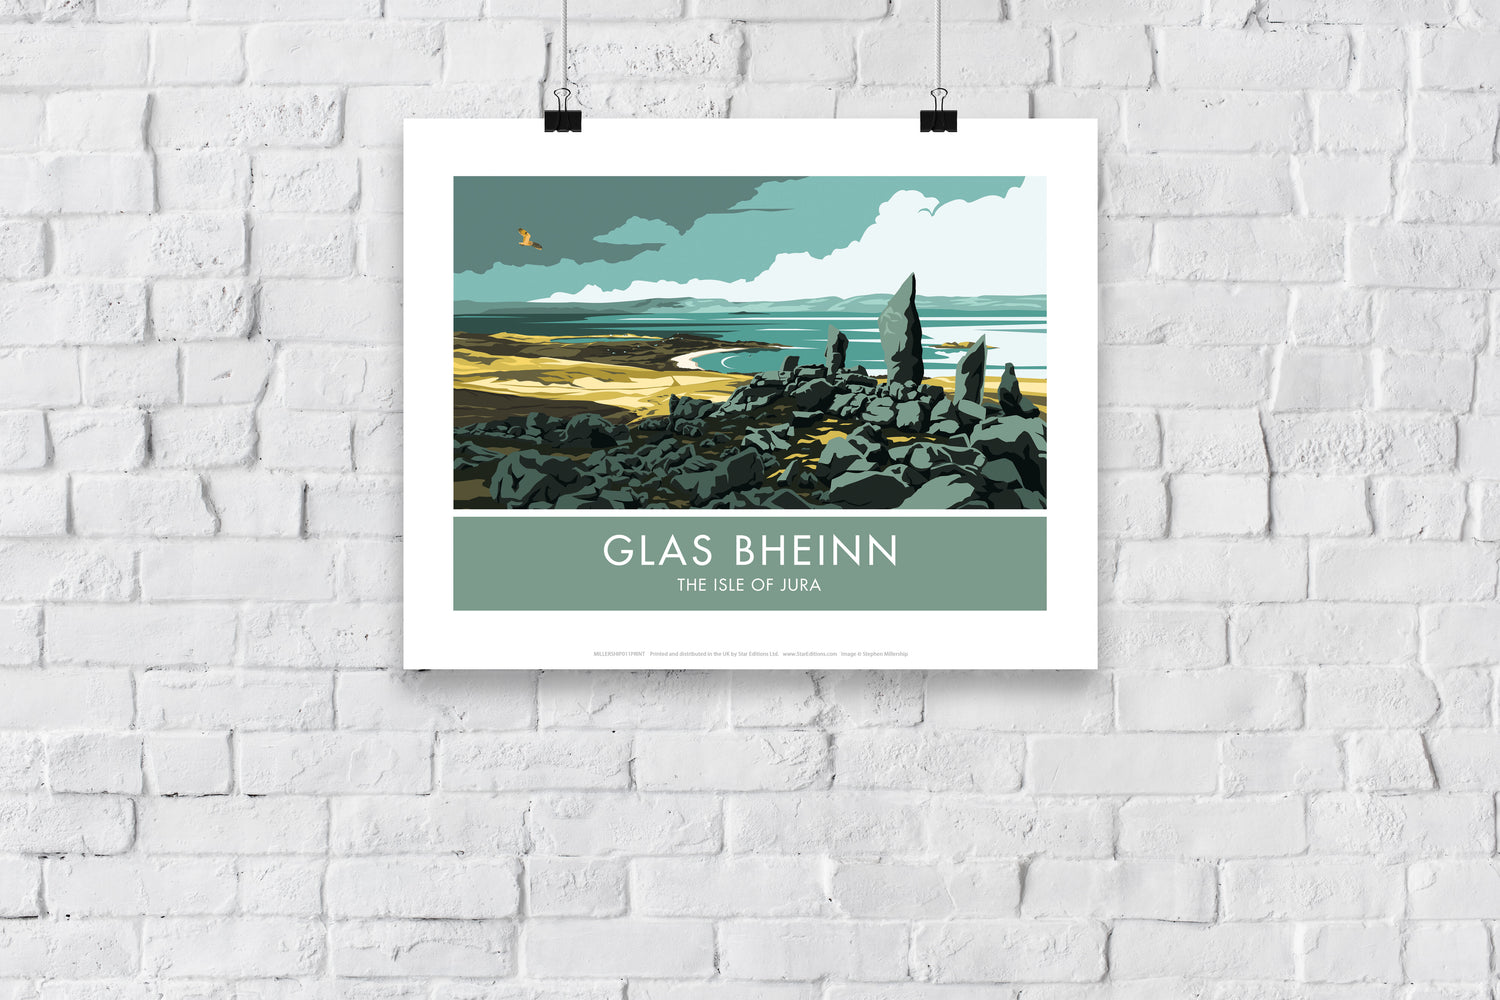 Glas Bheinn, The Isle of Jura, Scotland - Art Print